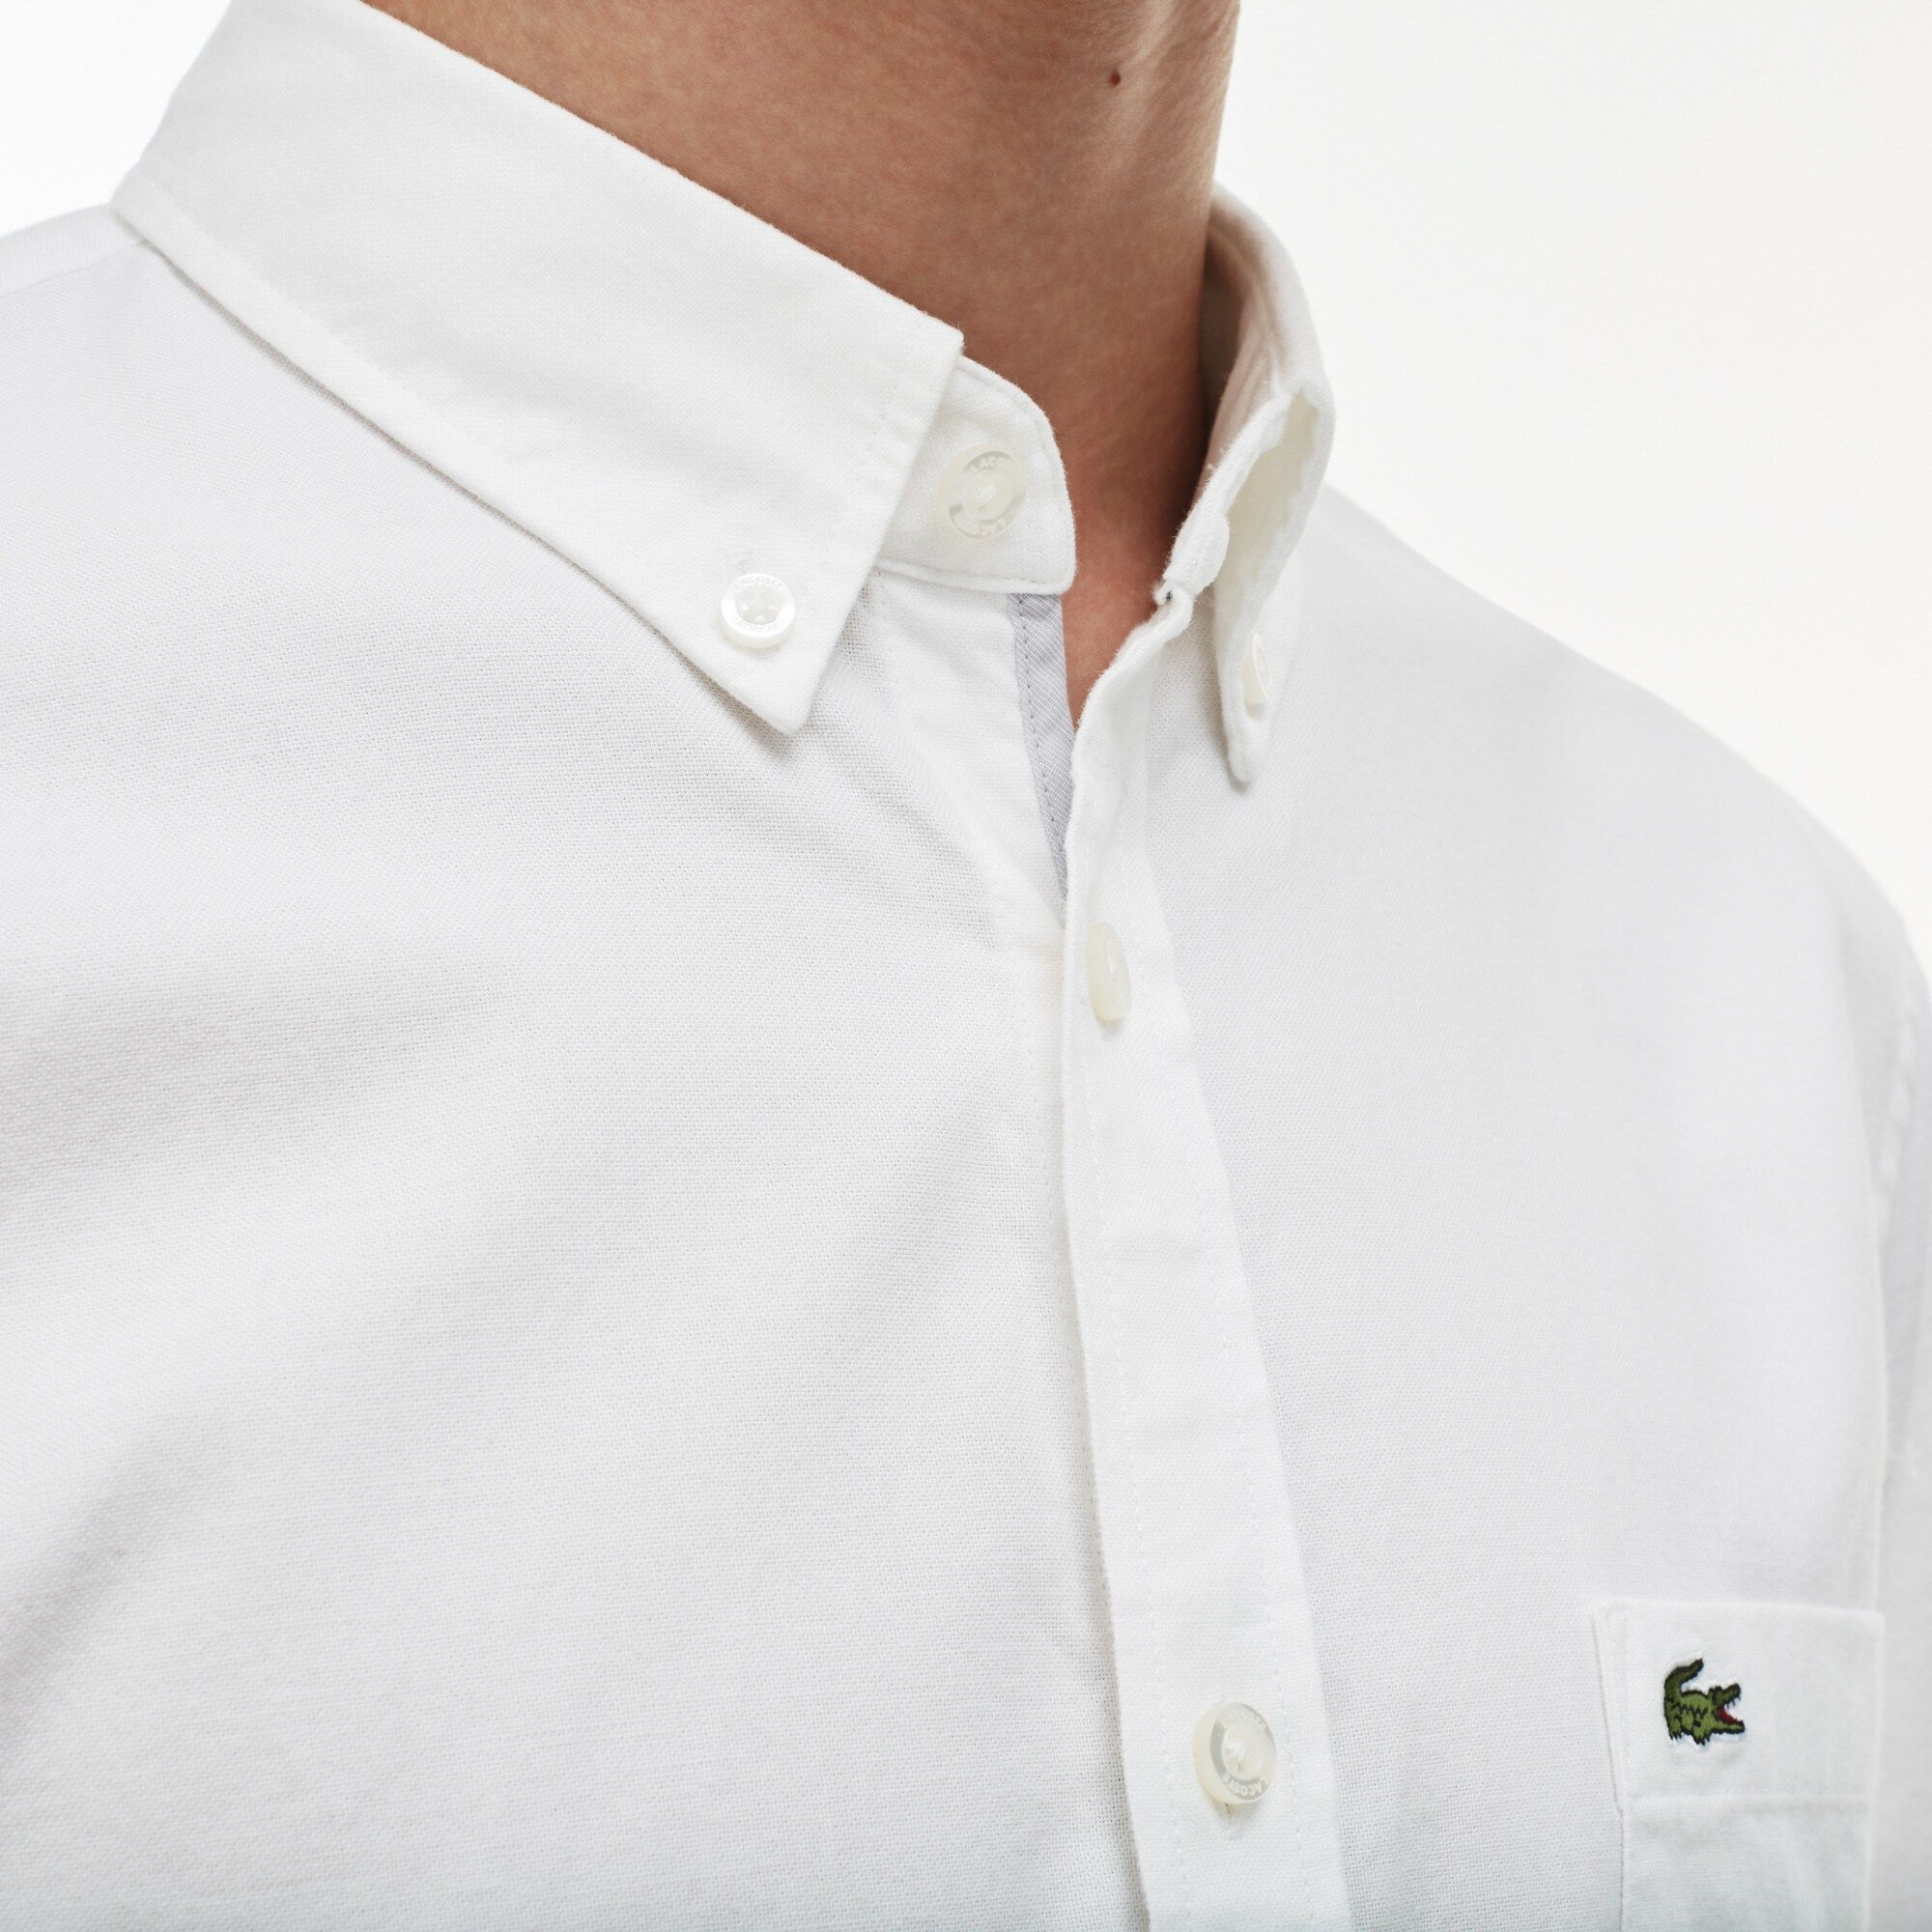  Lacoste Oxford Cotton Shirt Short Sleeves - White (Regular) 